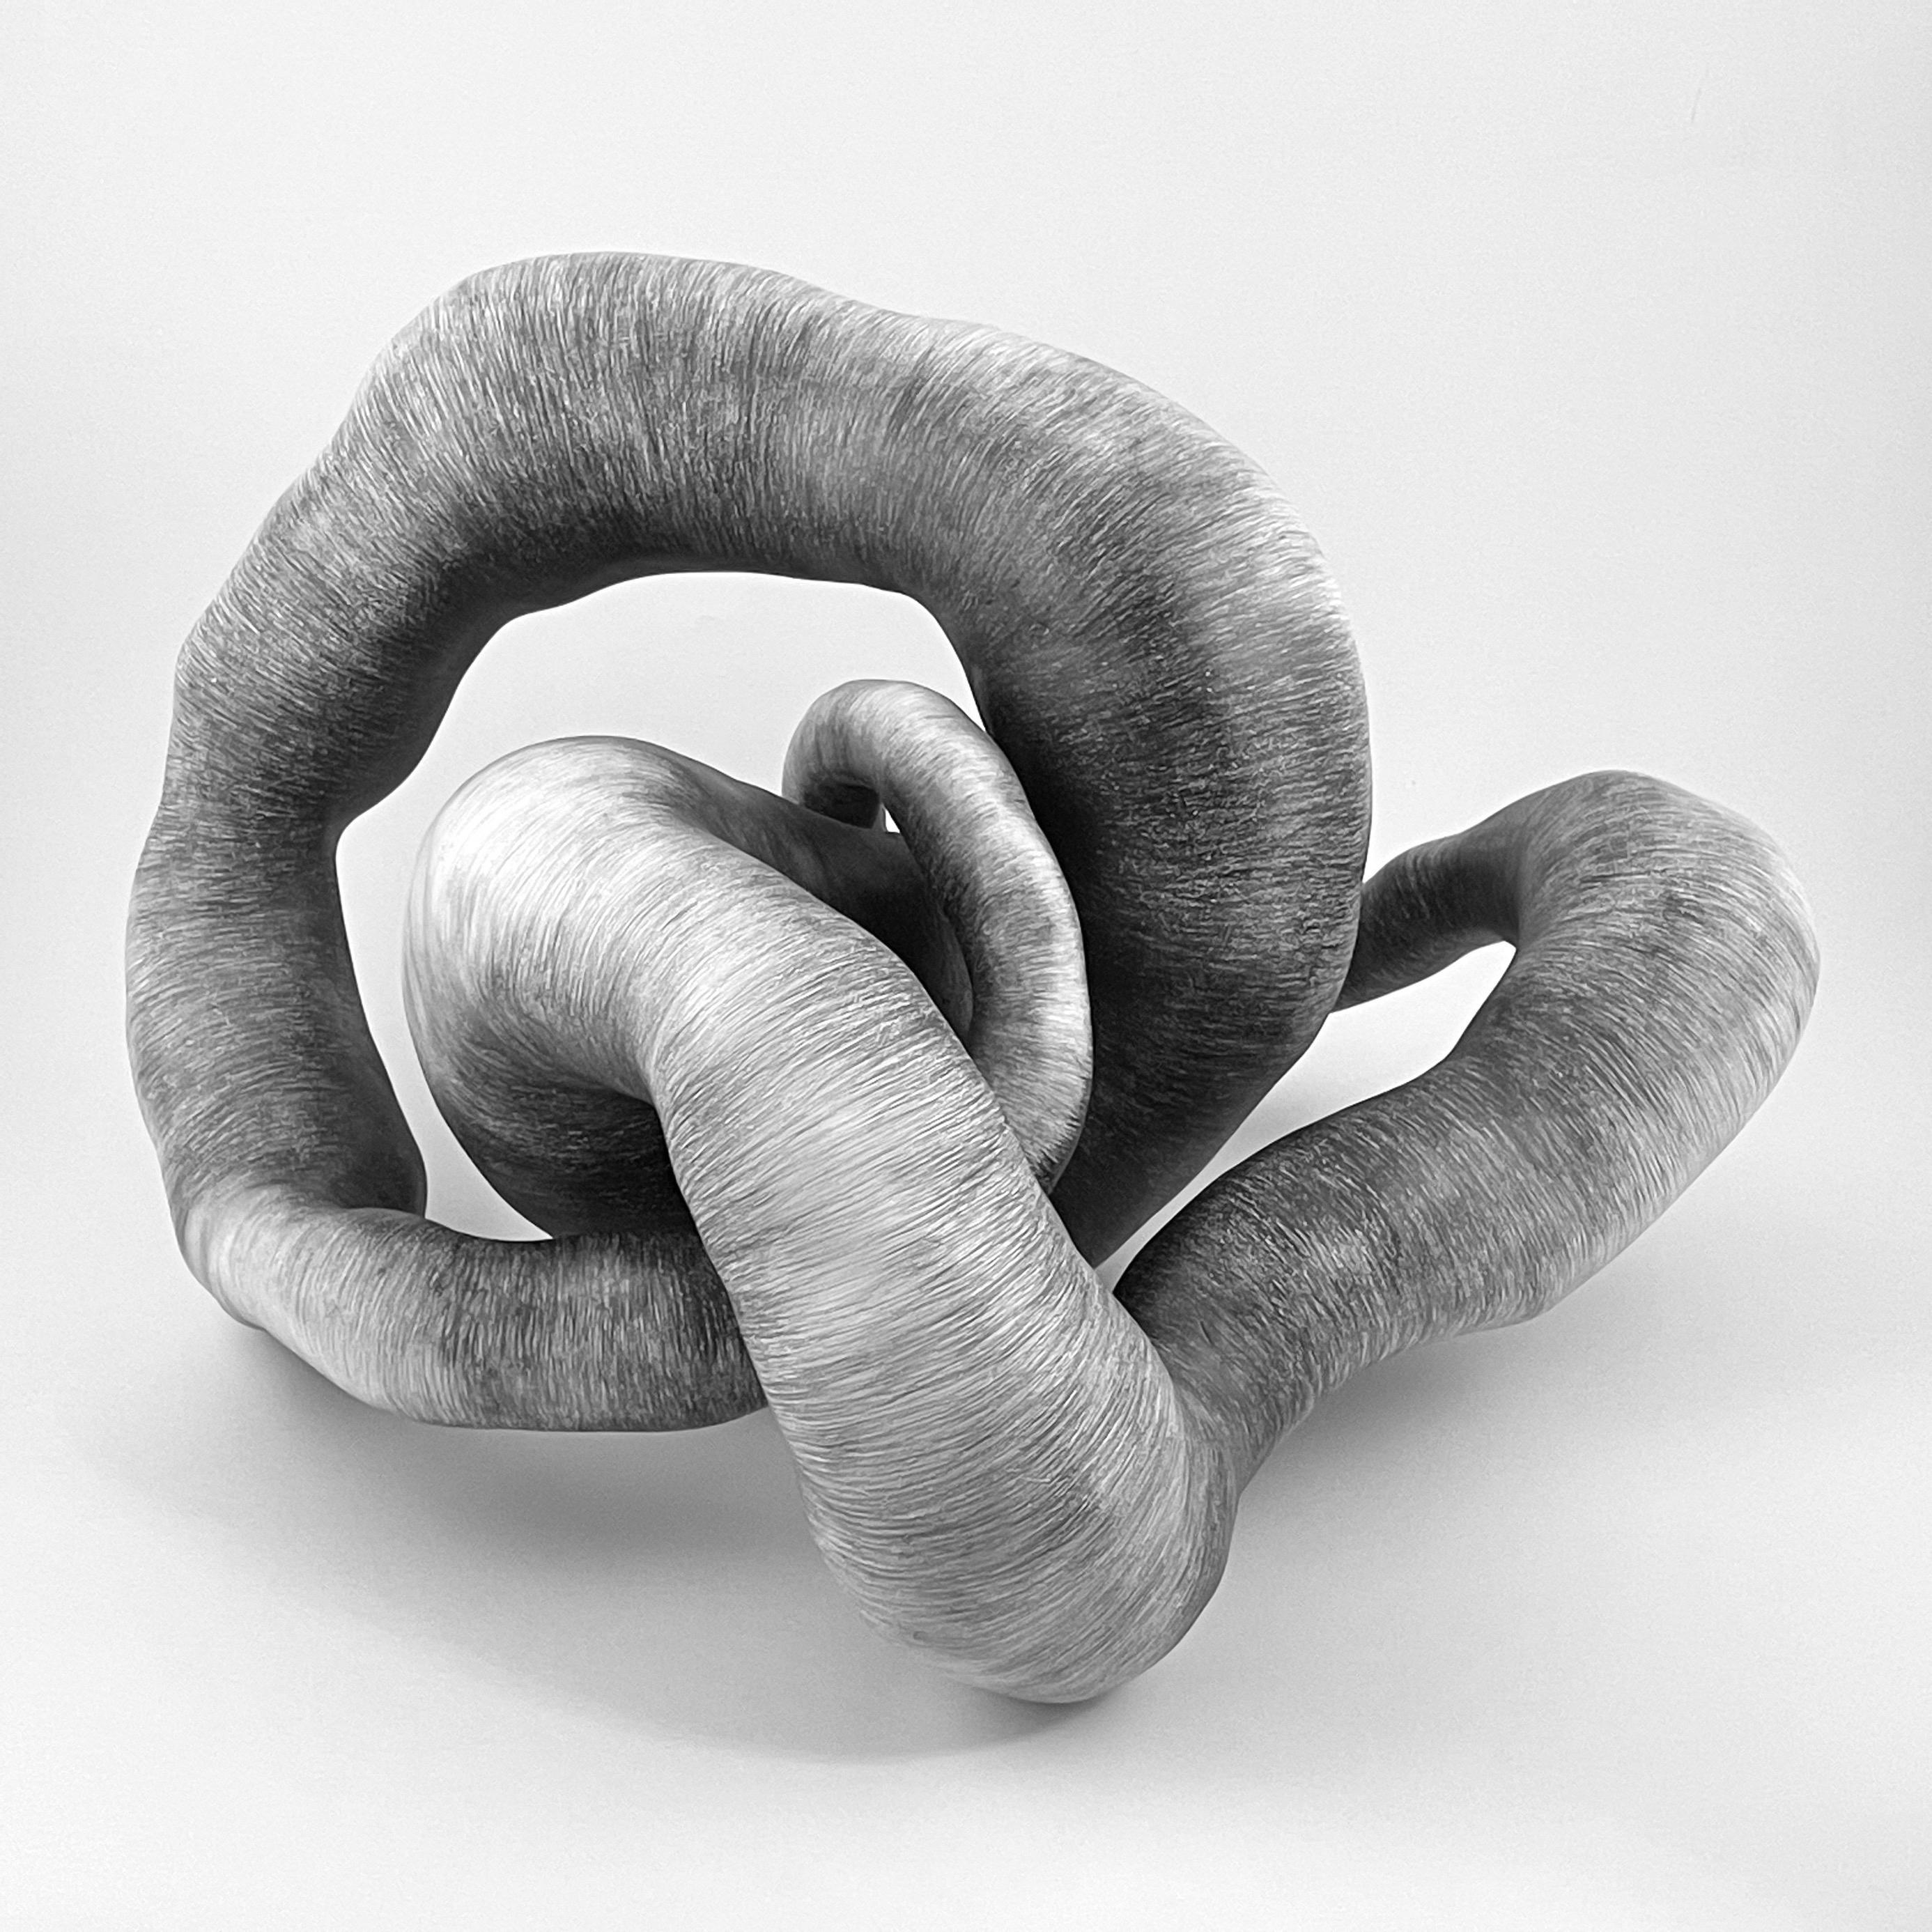 Judi Tavill Abstract Sculpture - Abstract Minimal Clay Sculpture: 'Twist'